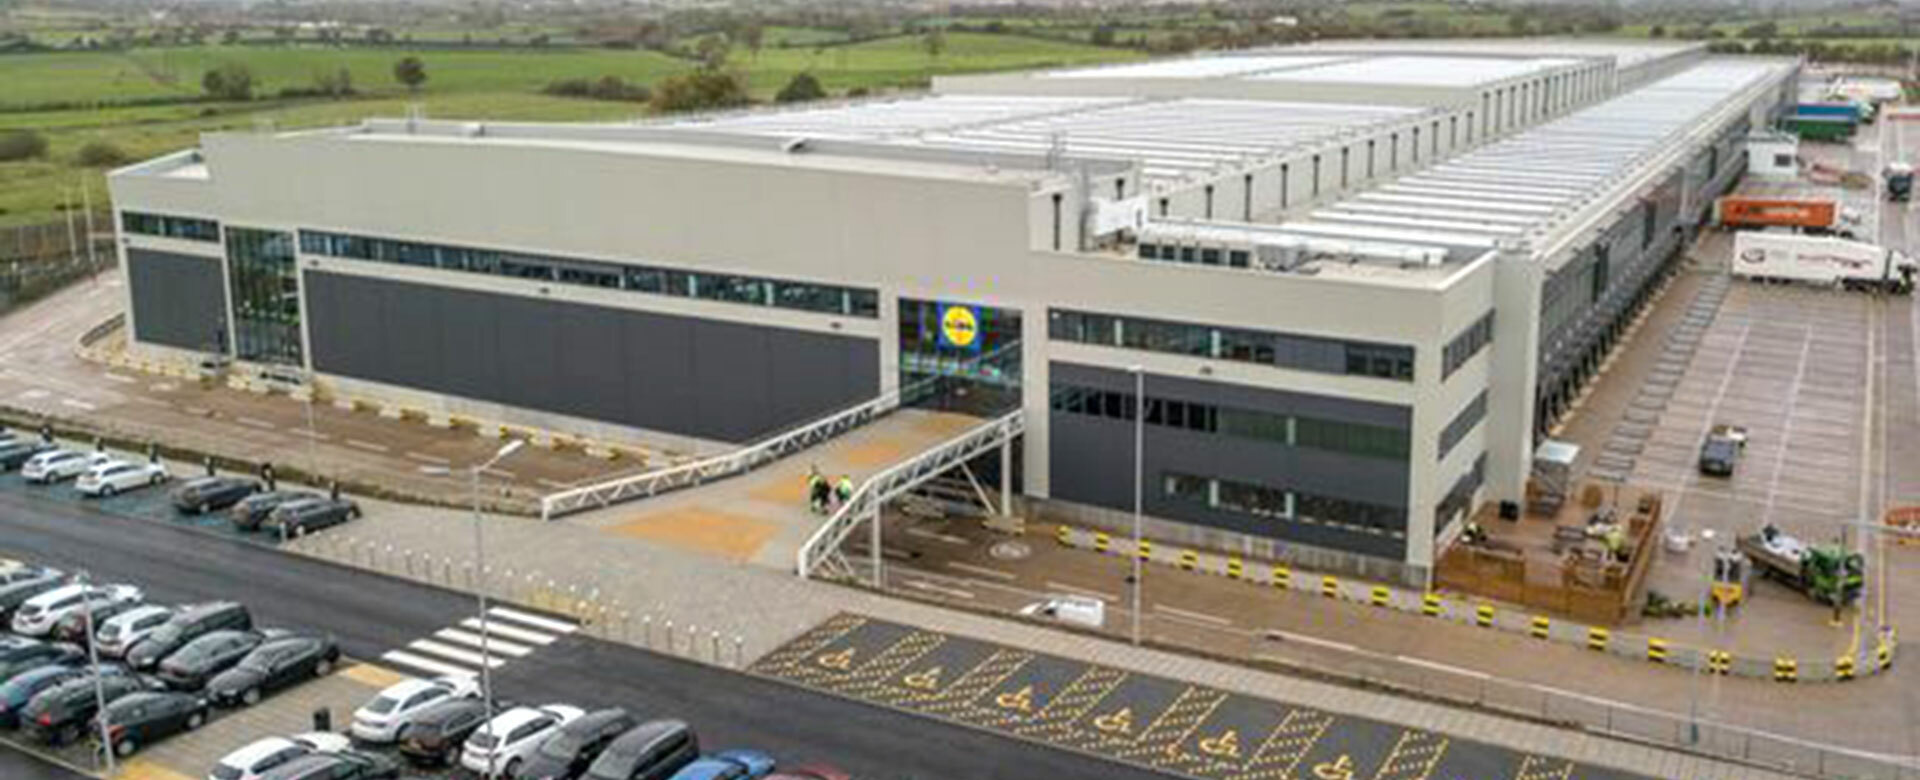 Lidl Exeter Regional Distribution Centre